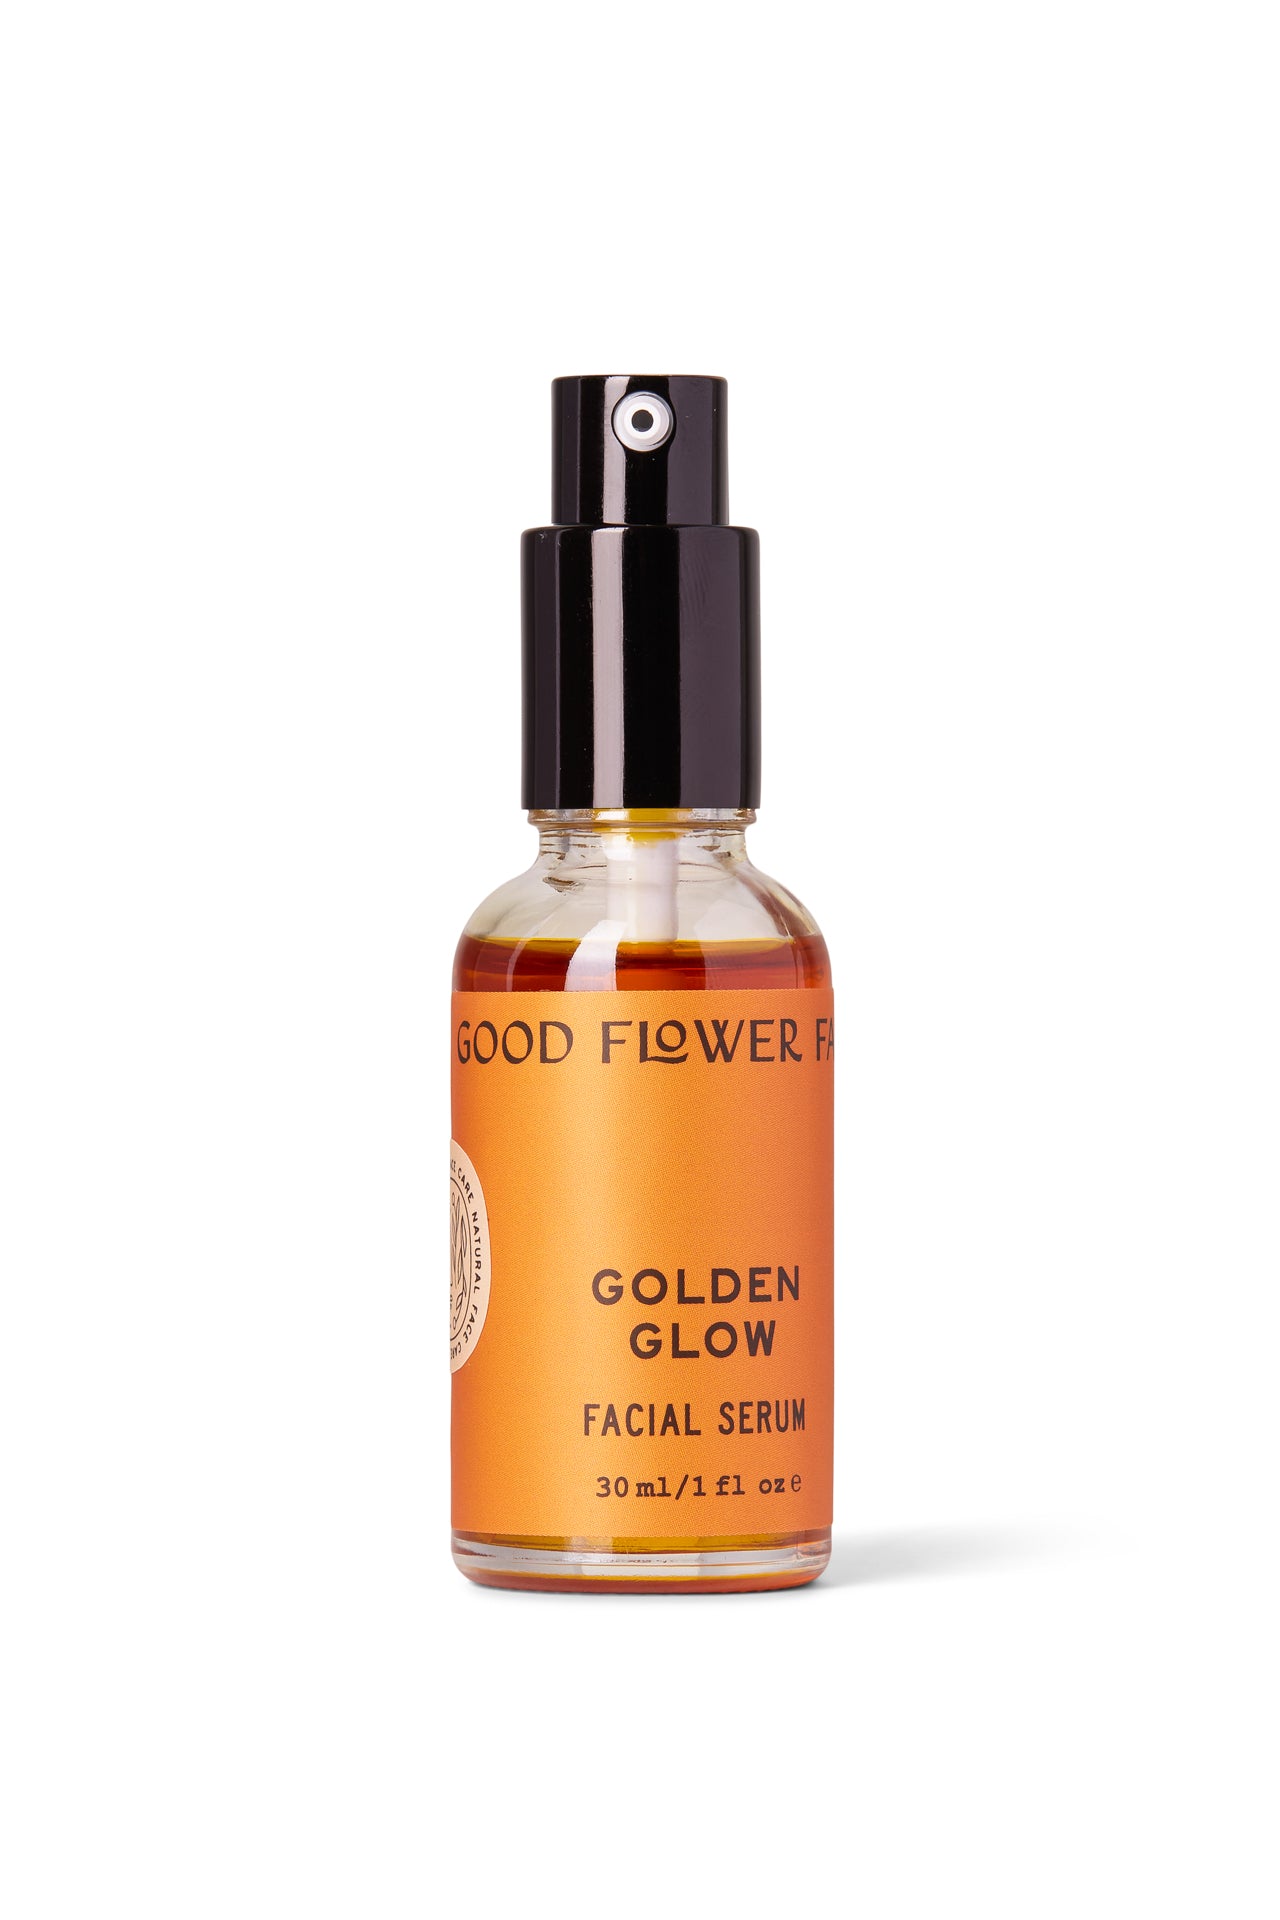 Golden Glow Facial Serum by Good Flower Farm - rich nourishing vitamin C facial serum